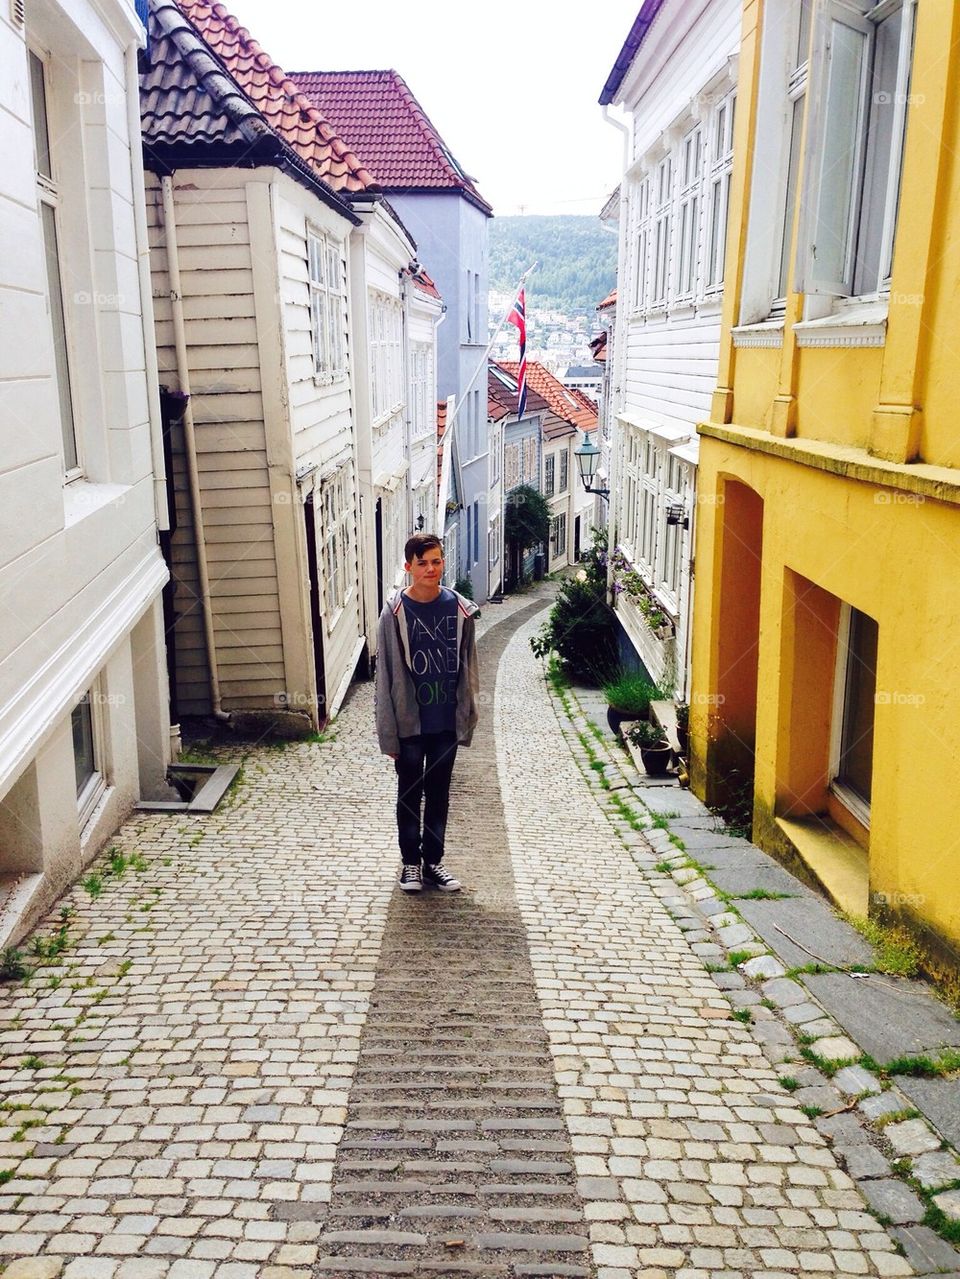 Old Bergen